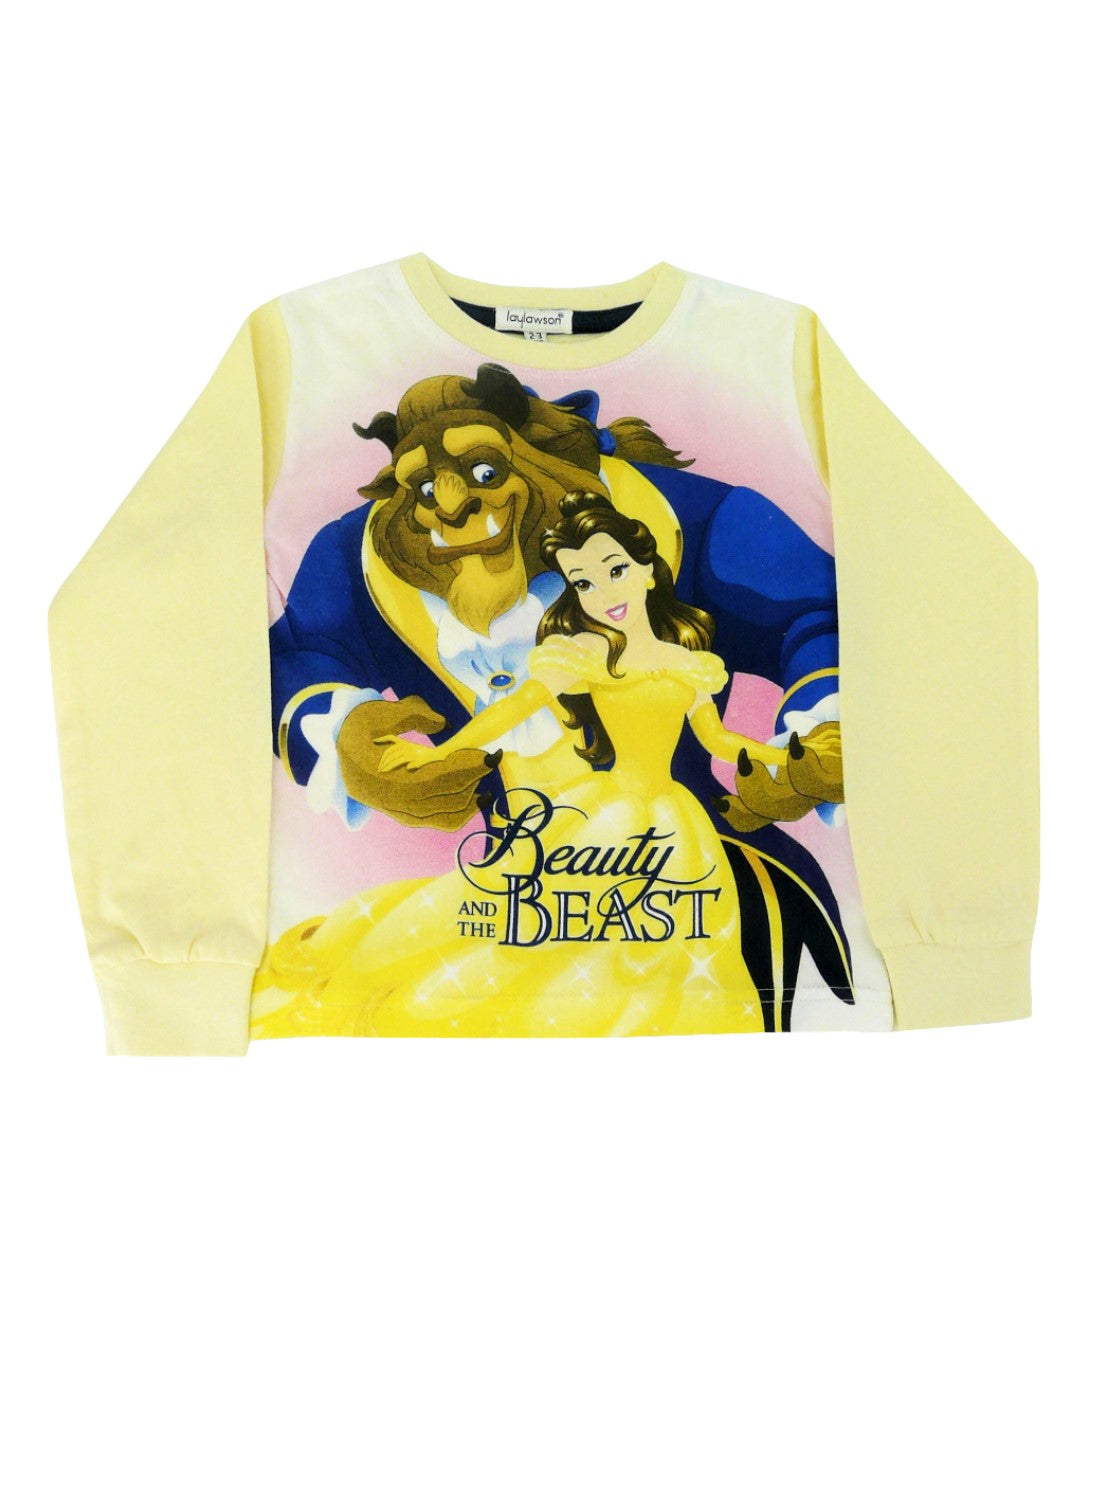 Beauty & The Beast "Dance" Girl's Yellow Pyjamas 2-3 Years